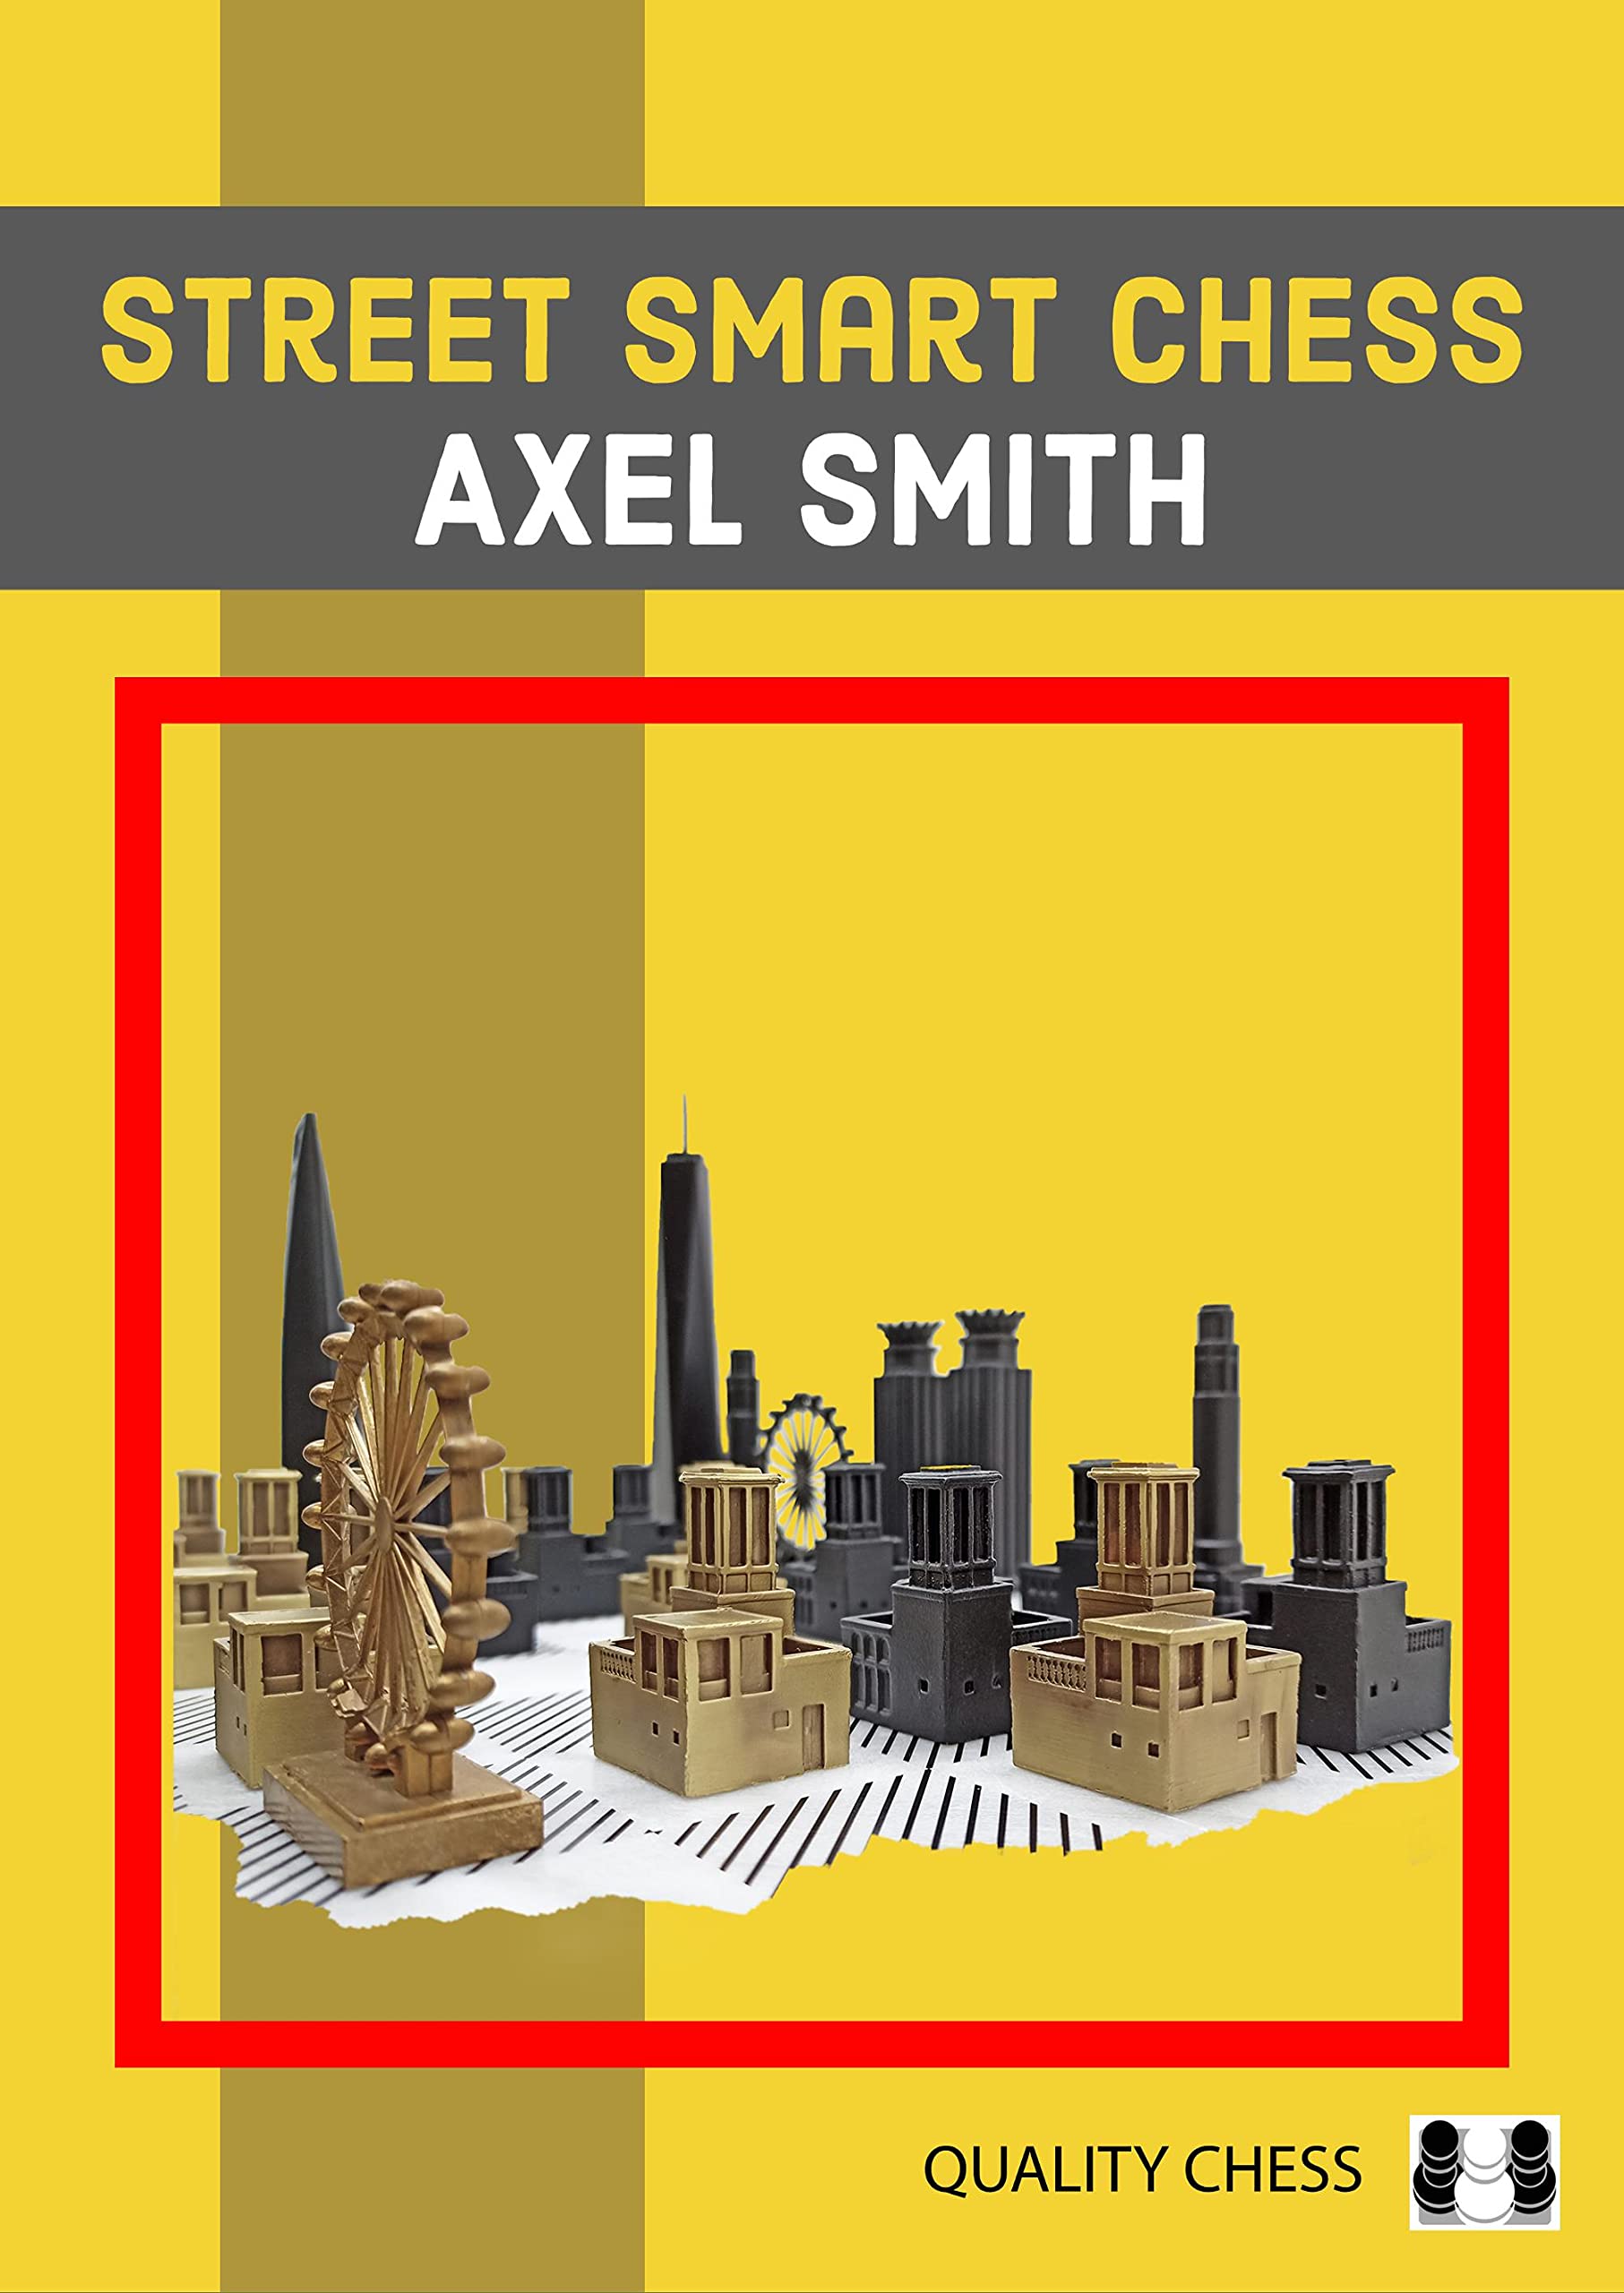 Street Smart Chess, Axel Smith, Quality Chess, 29 November 2021, ISBN-13 ‏ : ‎ 978-1784831219